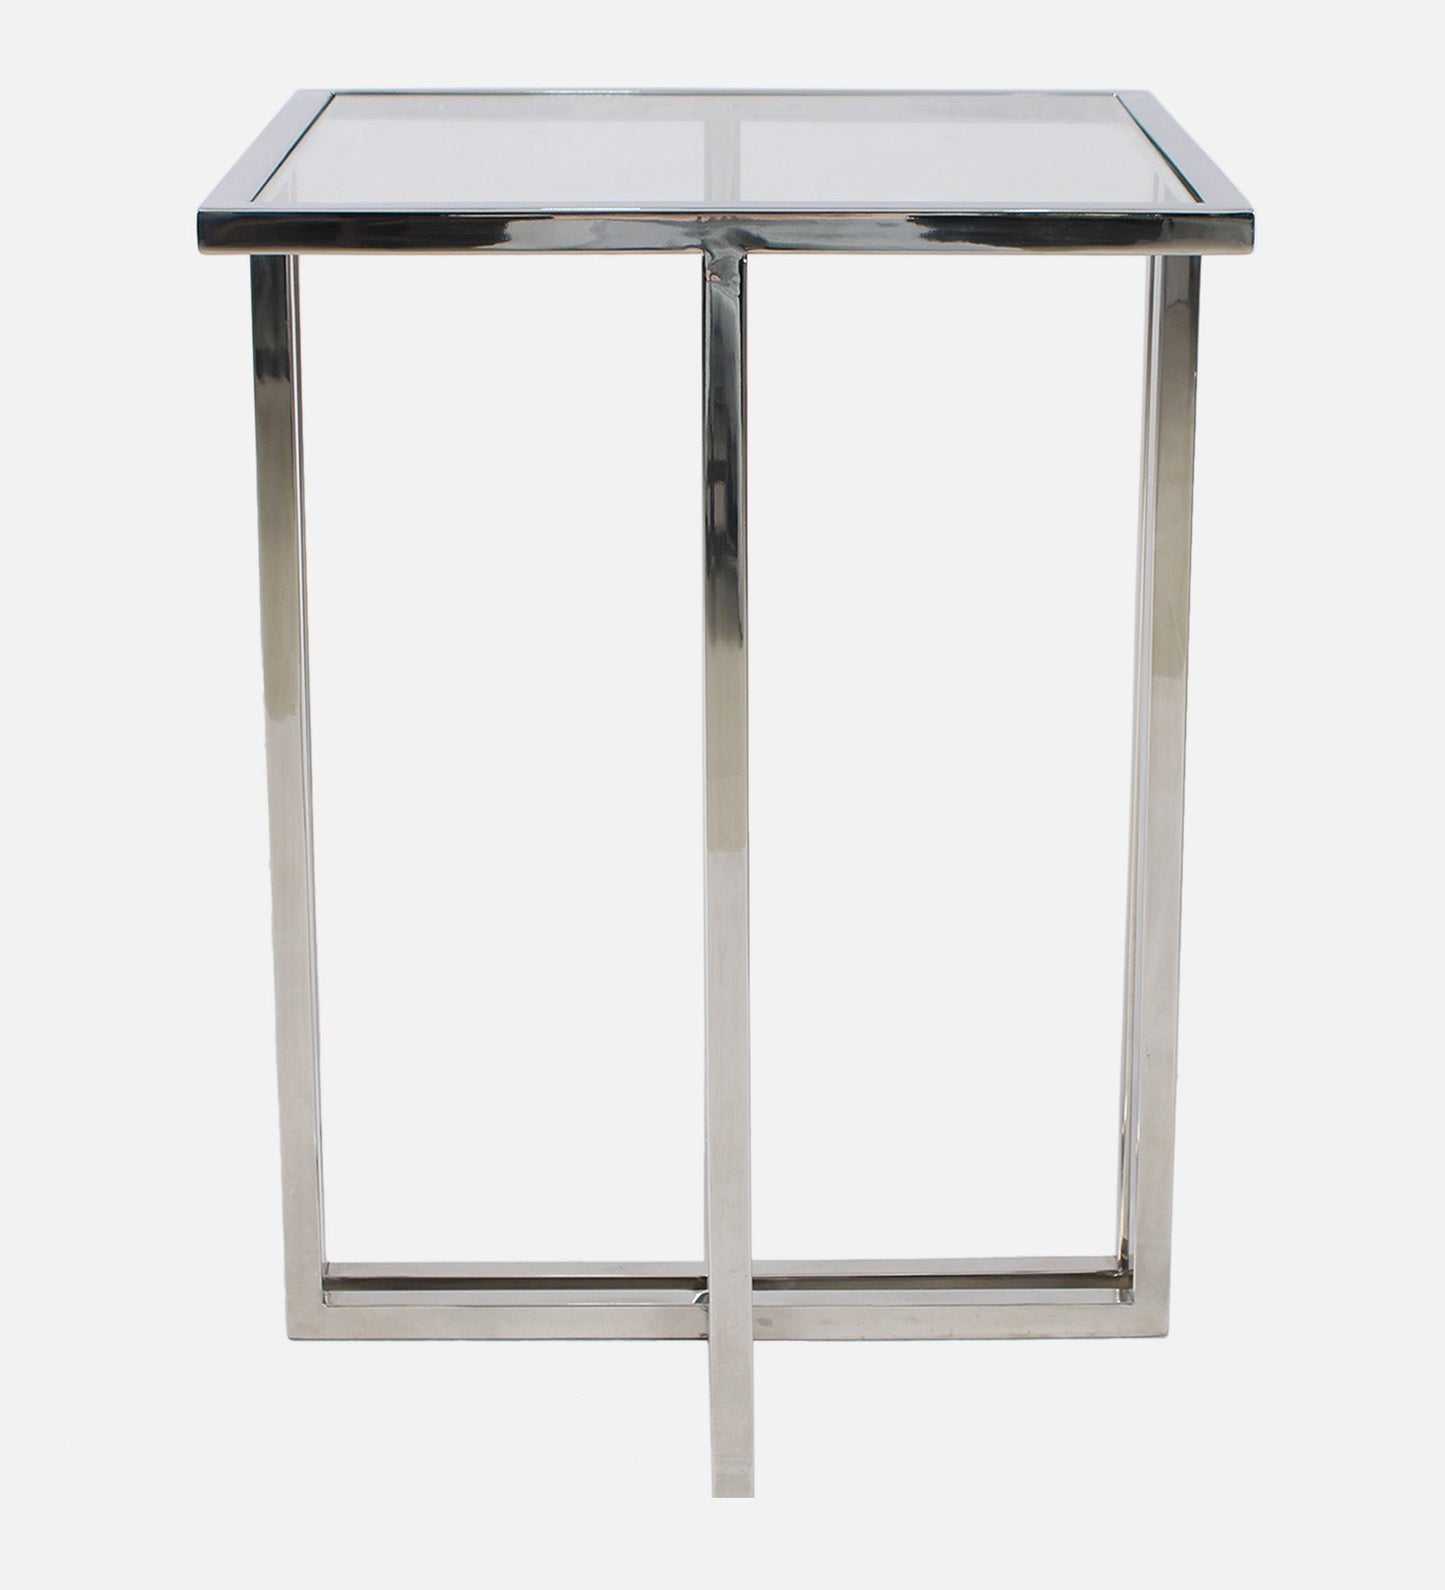 Meranti Glass Side Table In Chrome Finish